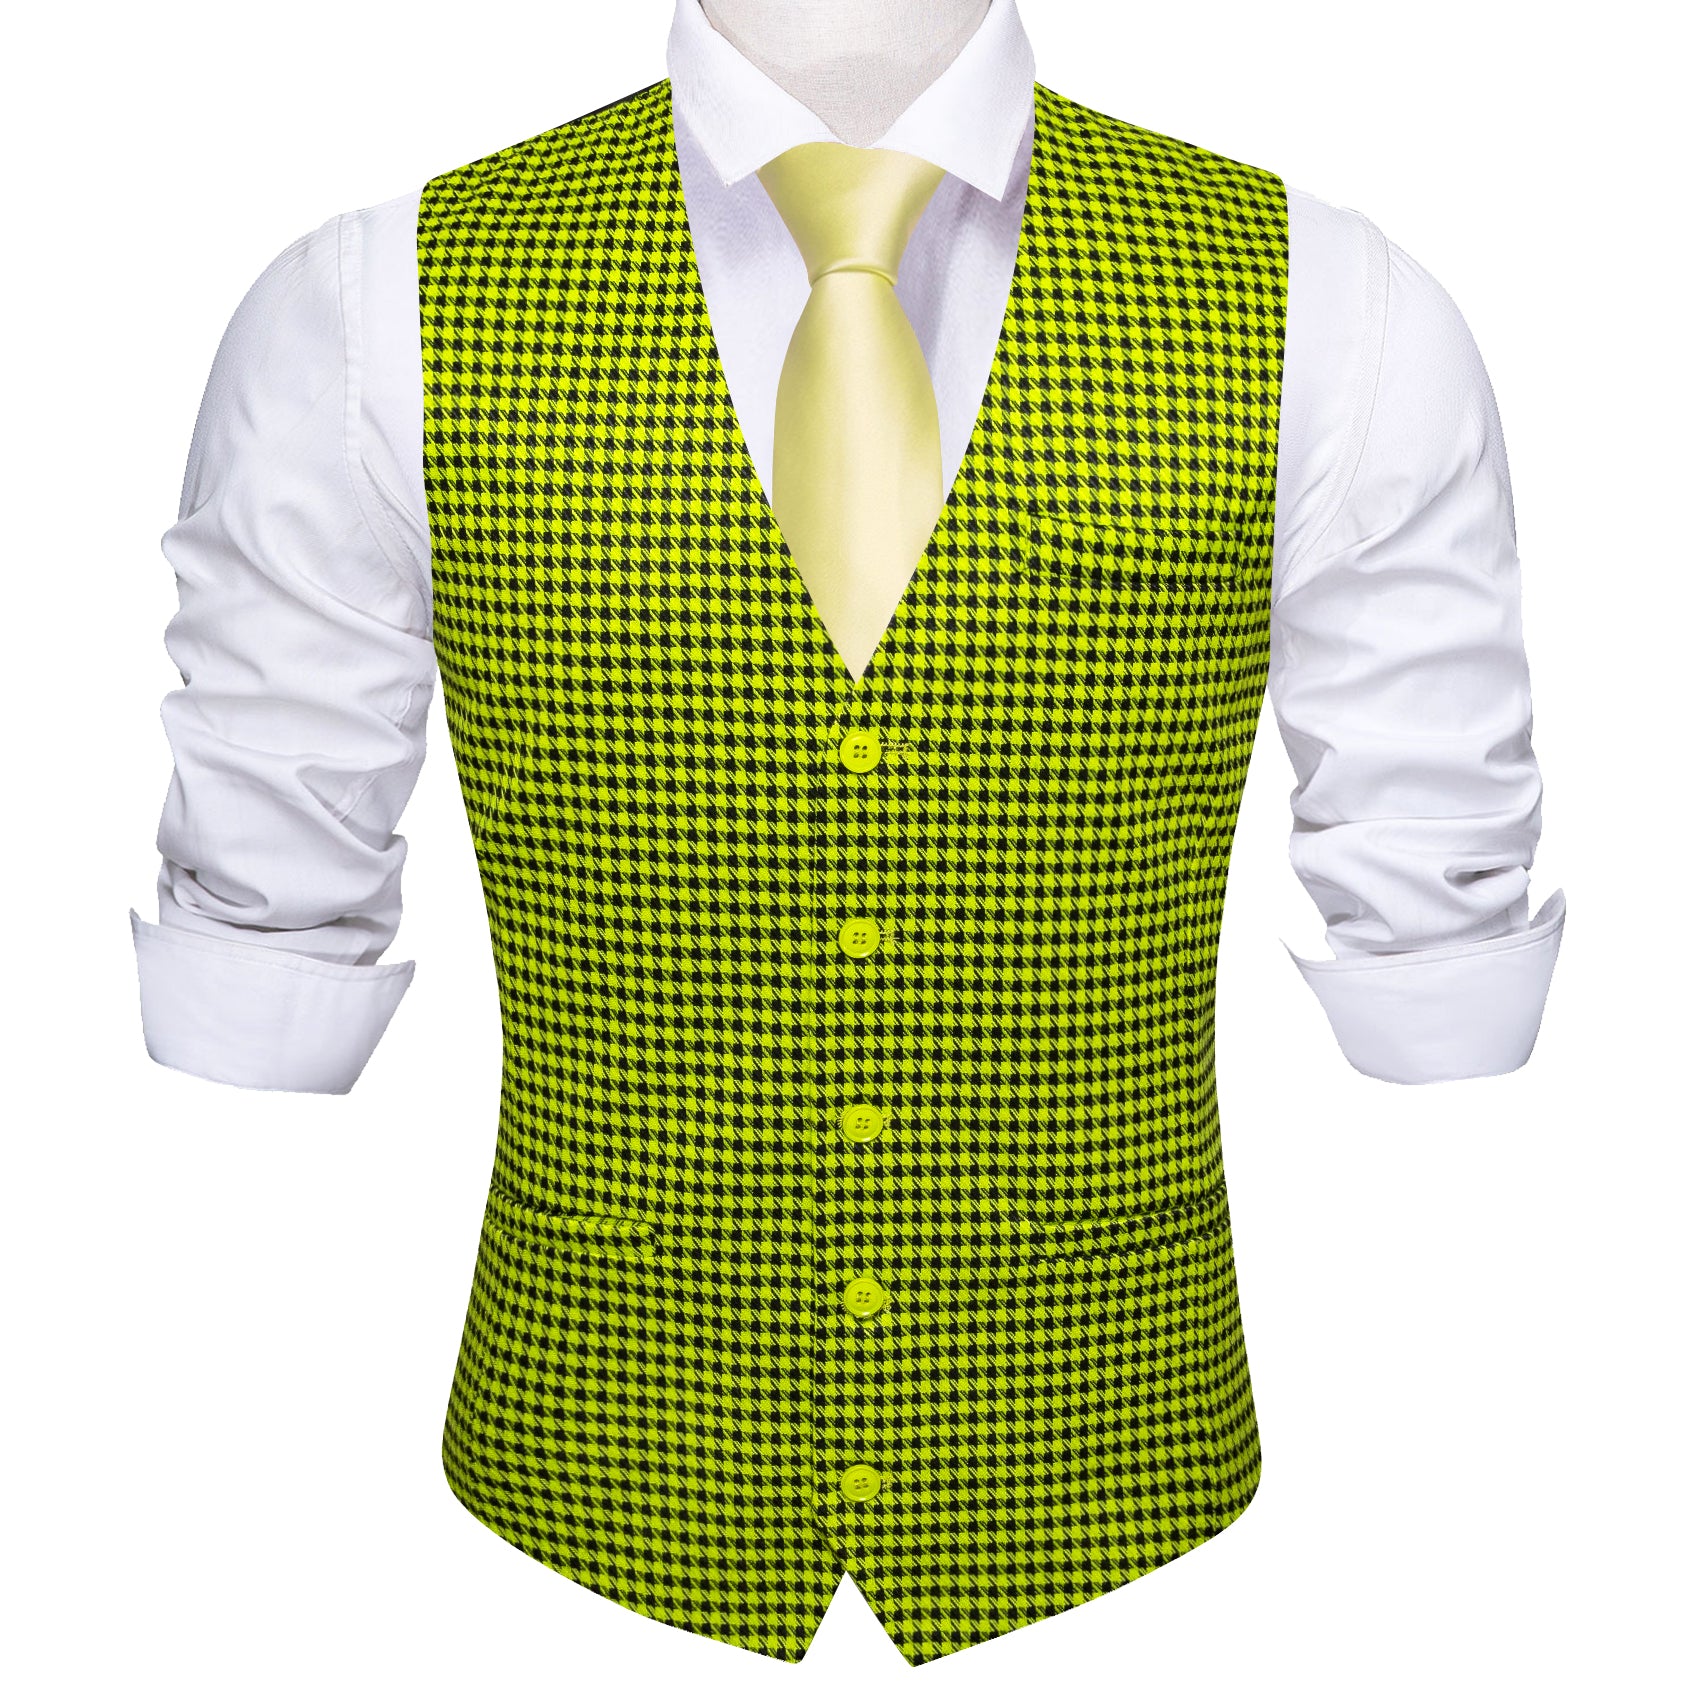 Barry.wang Yellow Green Plaid Waistcoat Vest Daily Wear